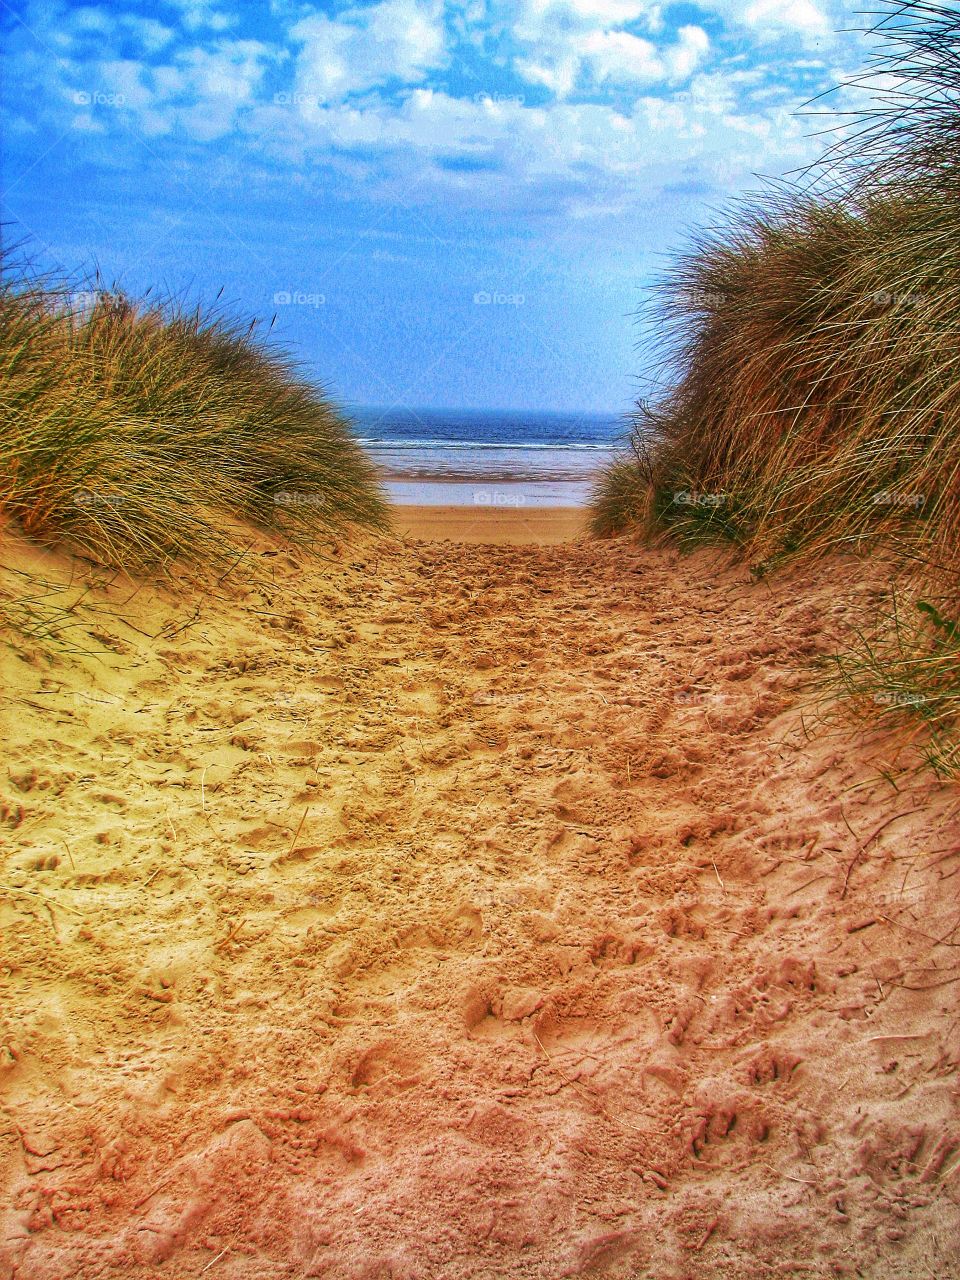 Path To The Beach. A sandy path through sand dunes to the beach on a sunny day.